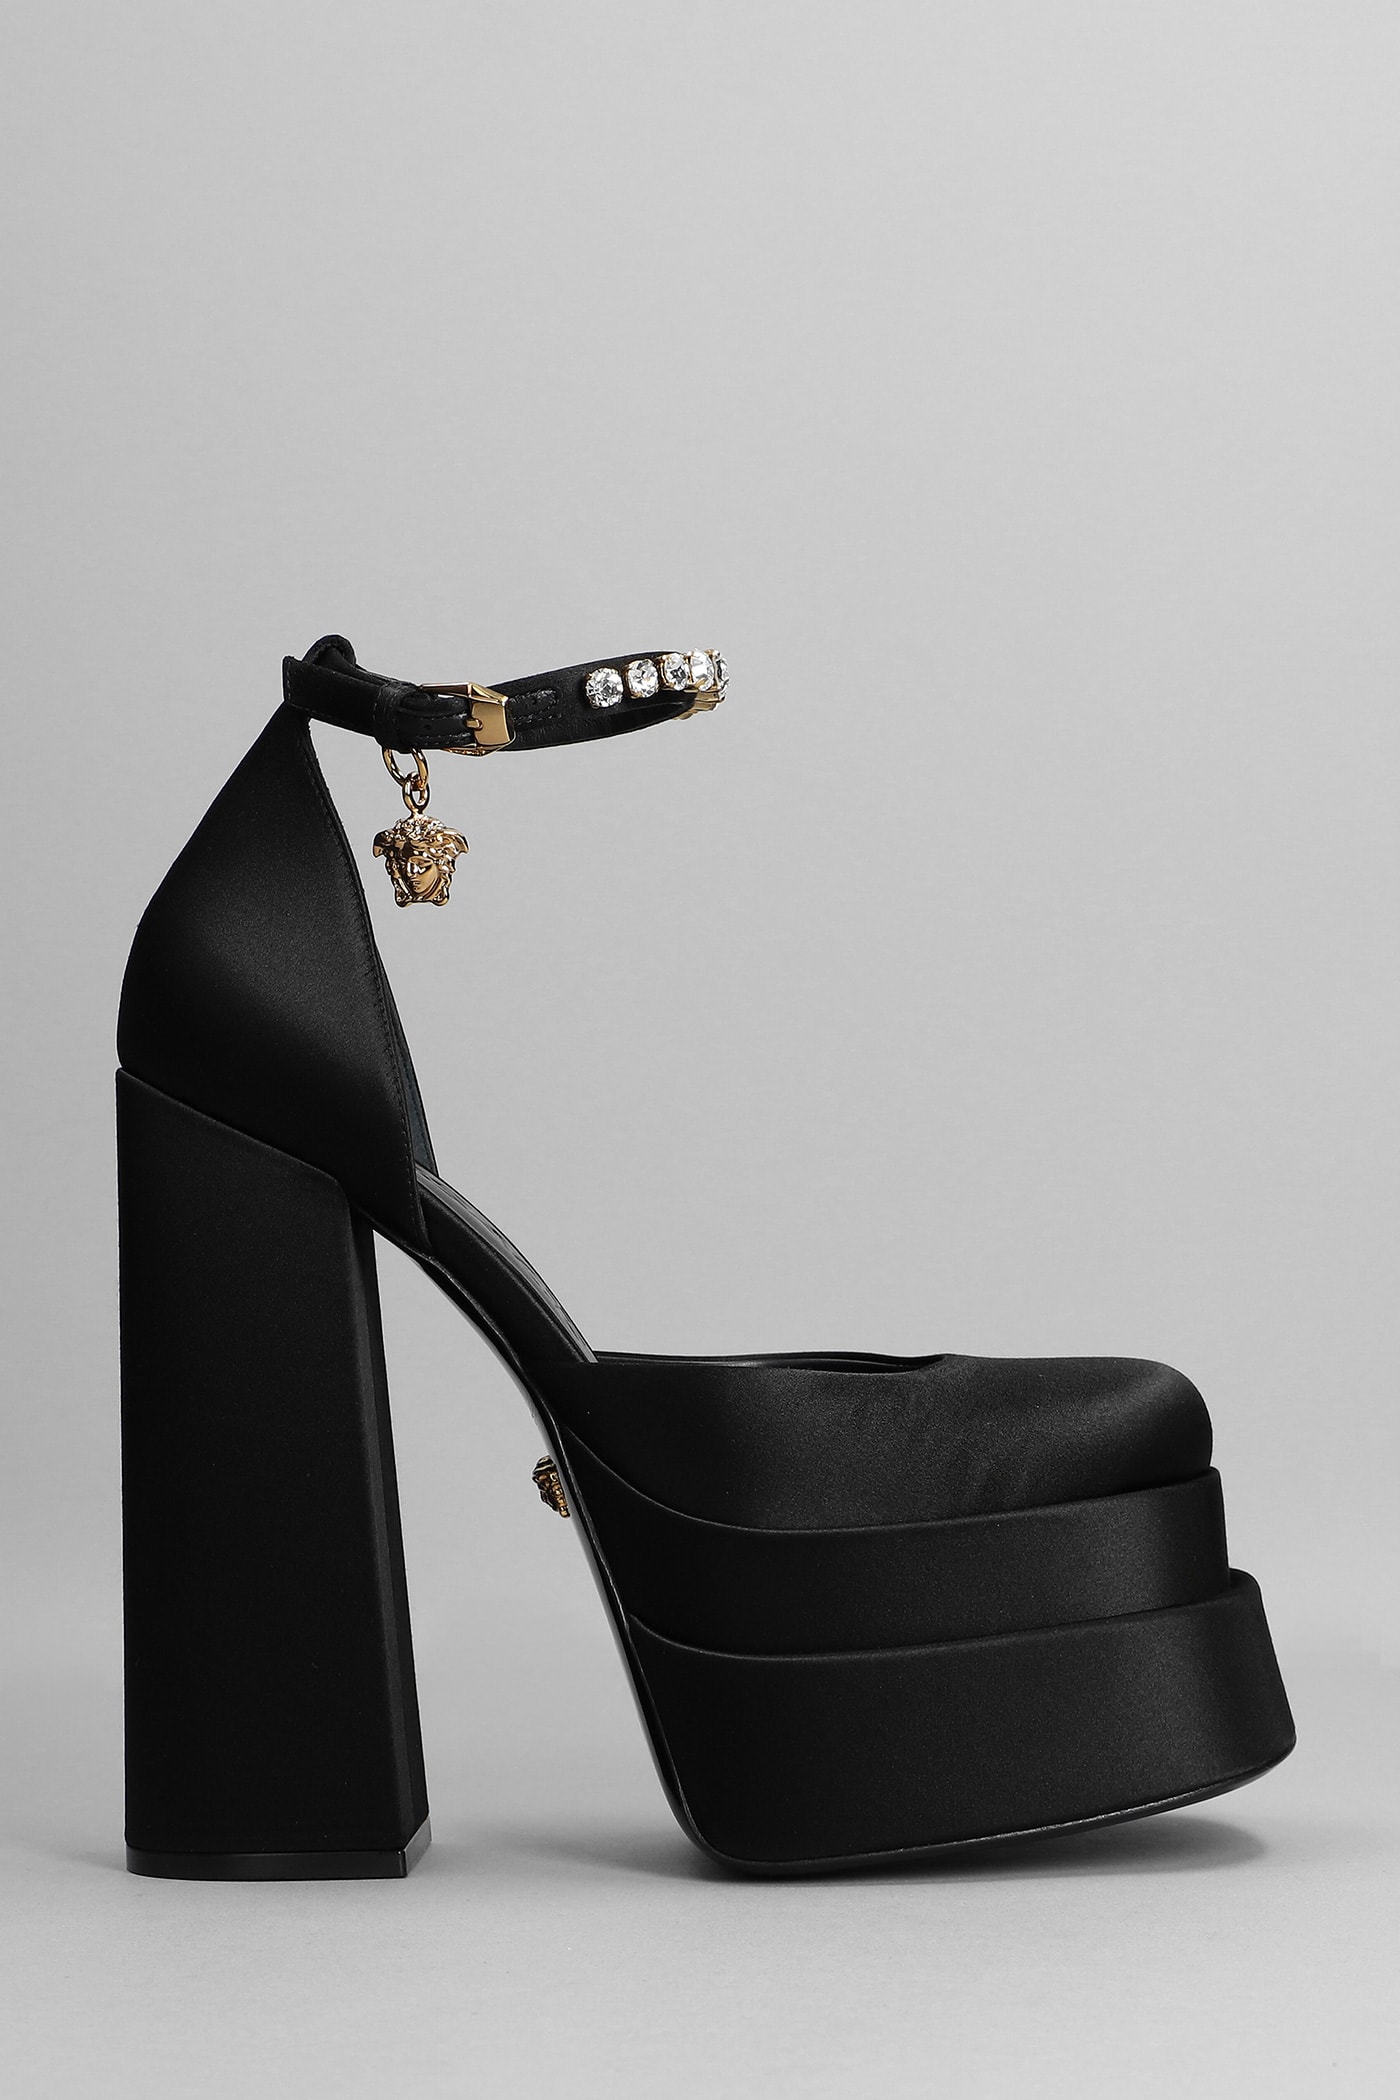 Versace Aevitas Pumps In Black Satin